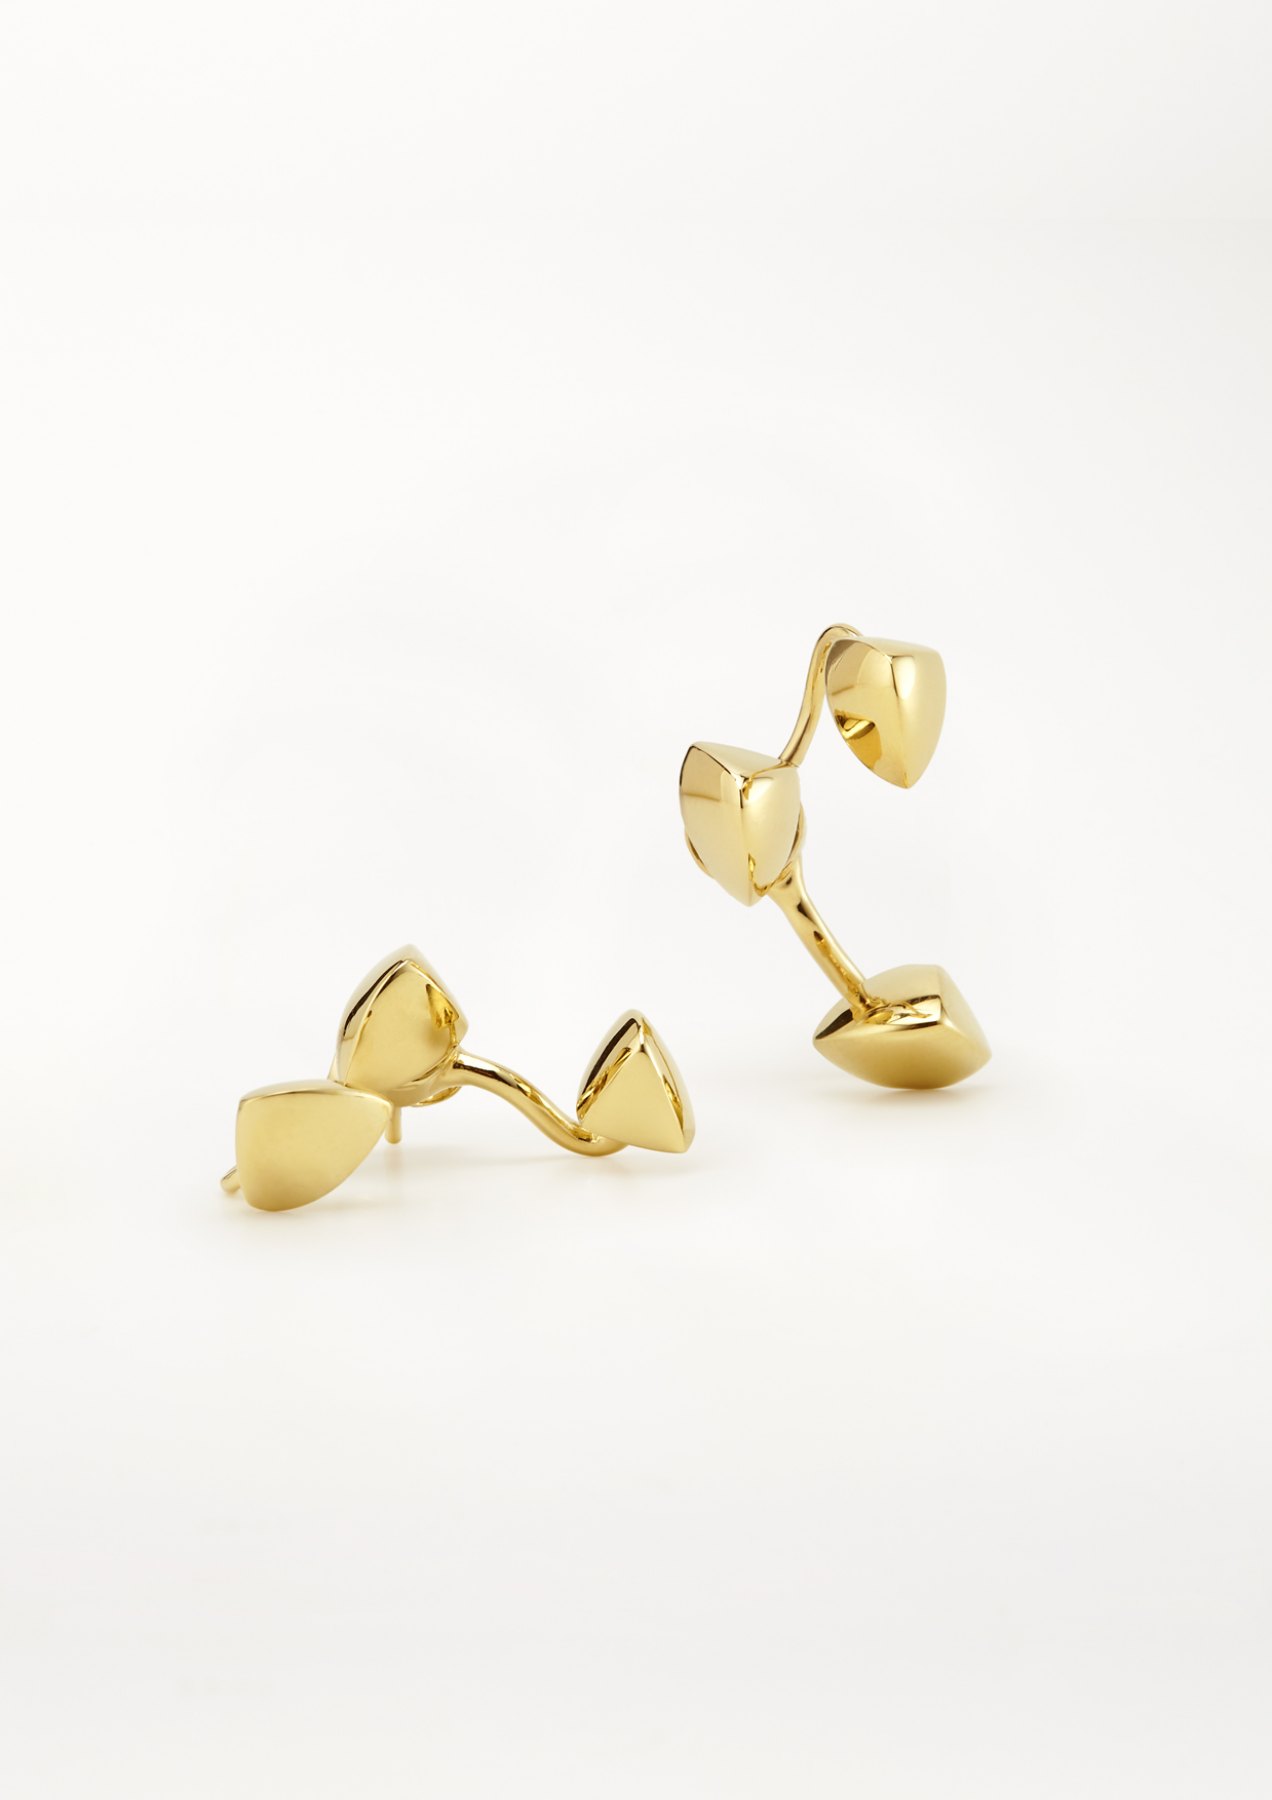 xenia bous jewellery washed stone 07 threefold twinkle earrings gold